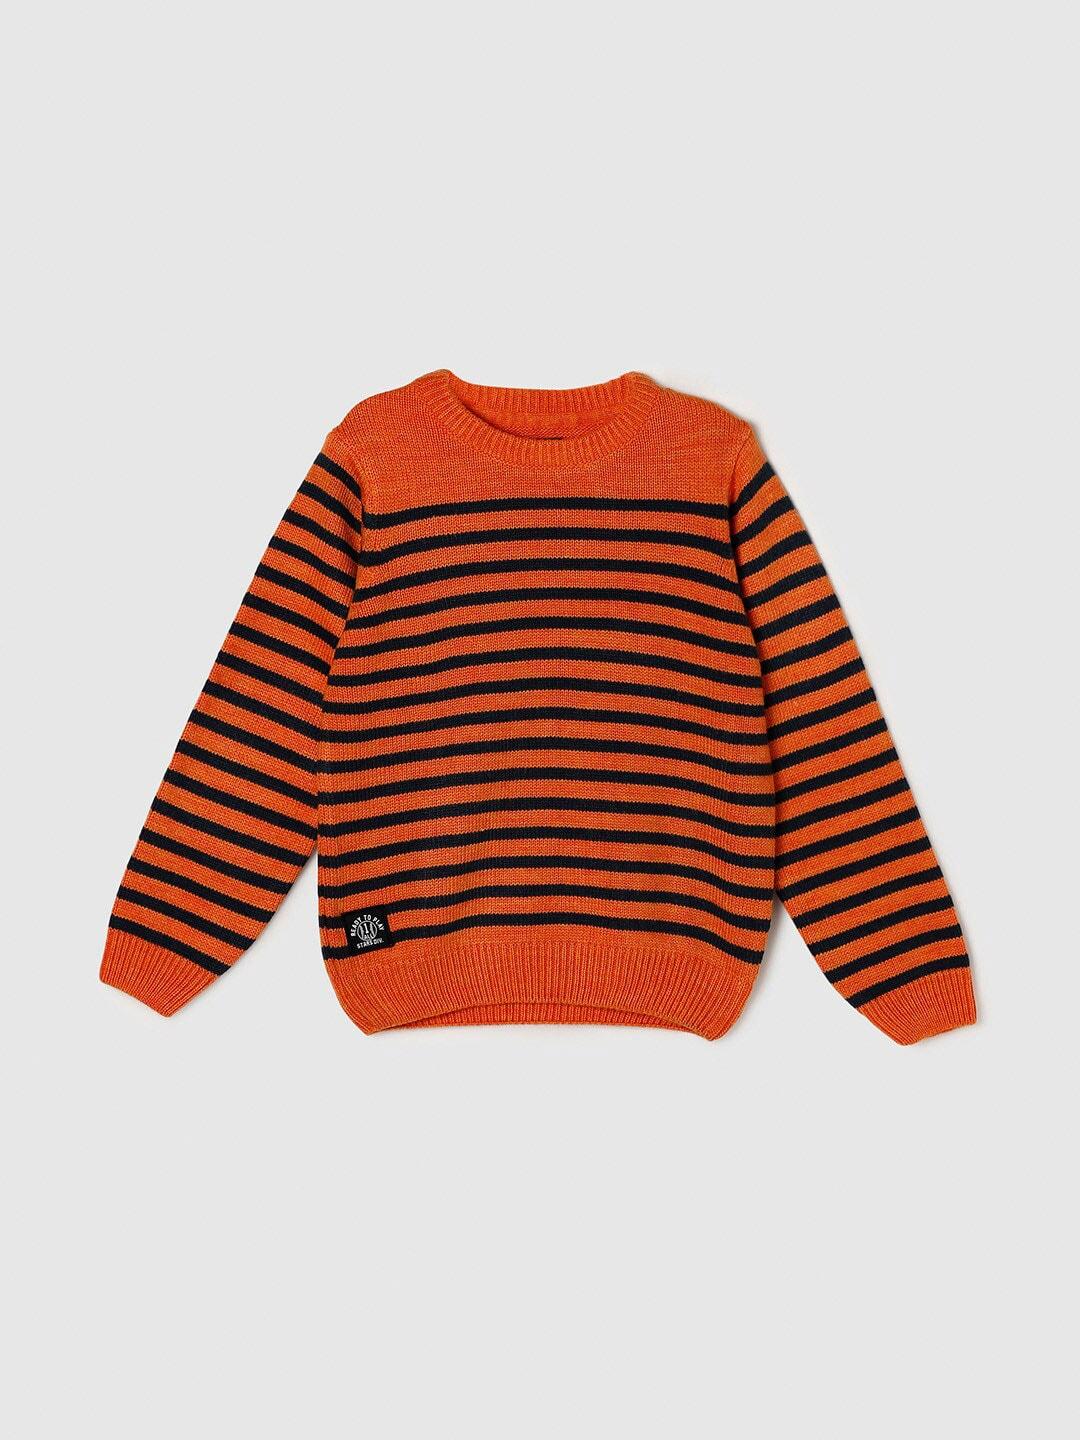 max Boys Orange & Black Striped Pullover